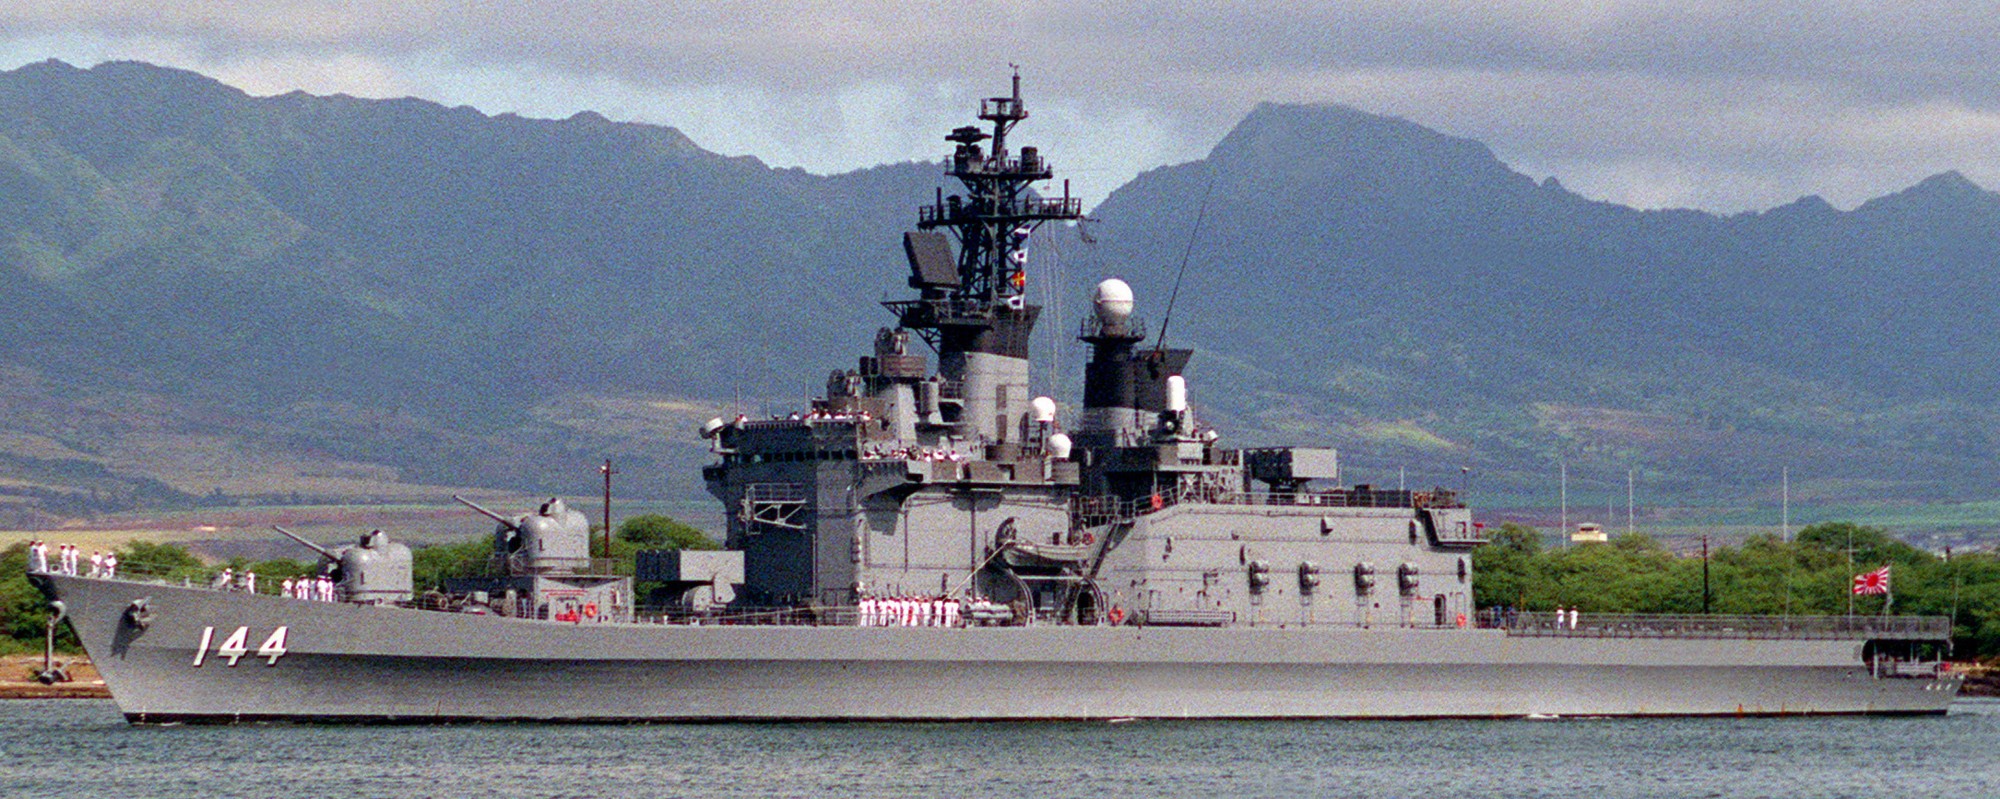 ddh-144 jds kurama shirane class helicopter destroyer japan maritime self defense force jmsdf 47